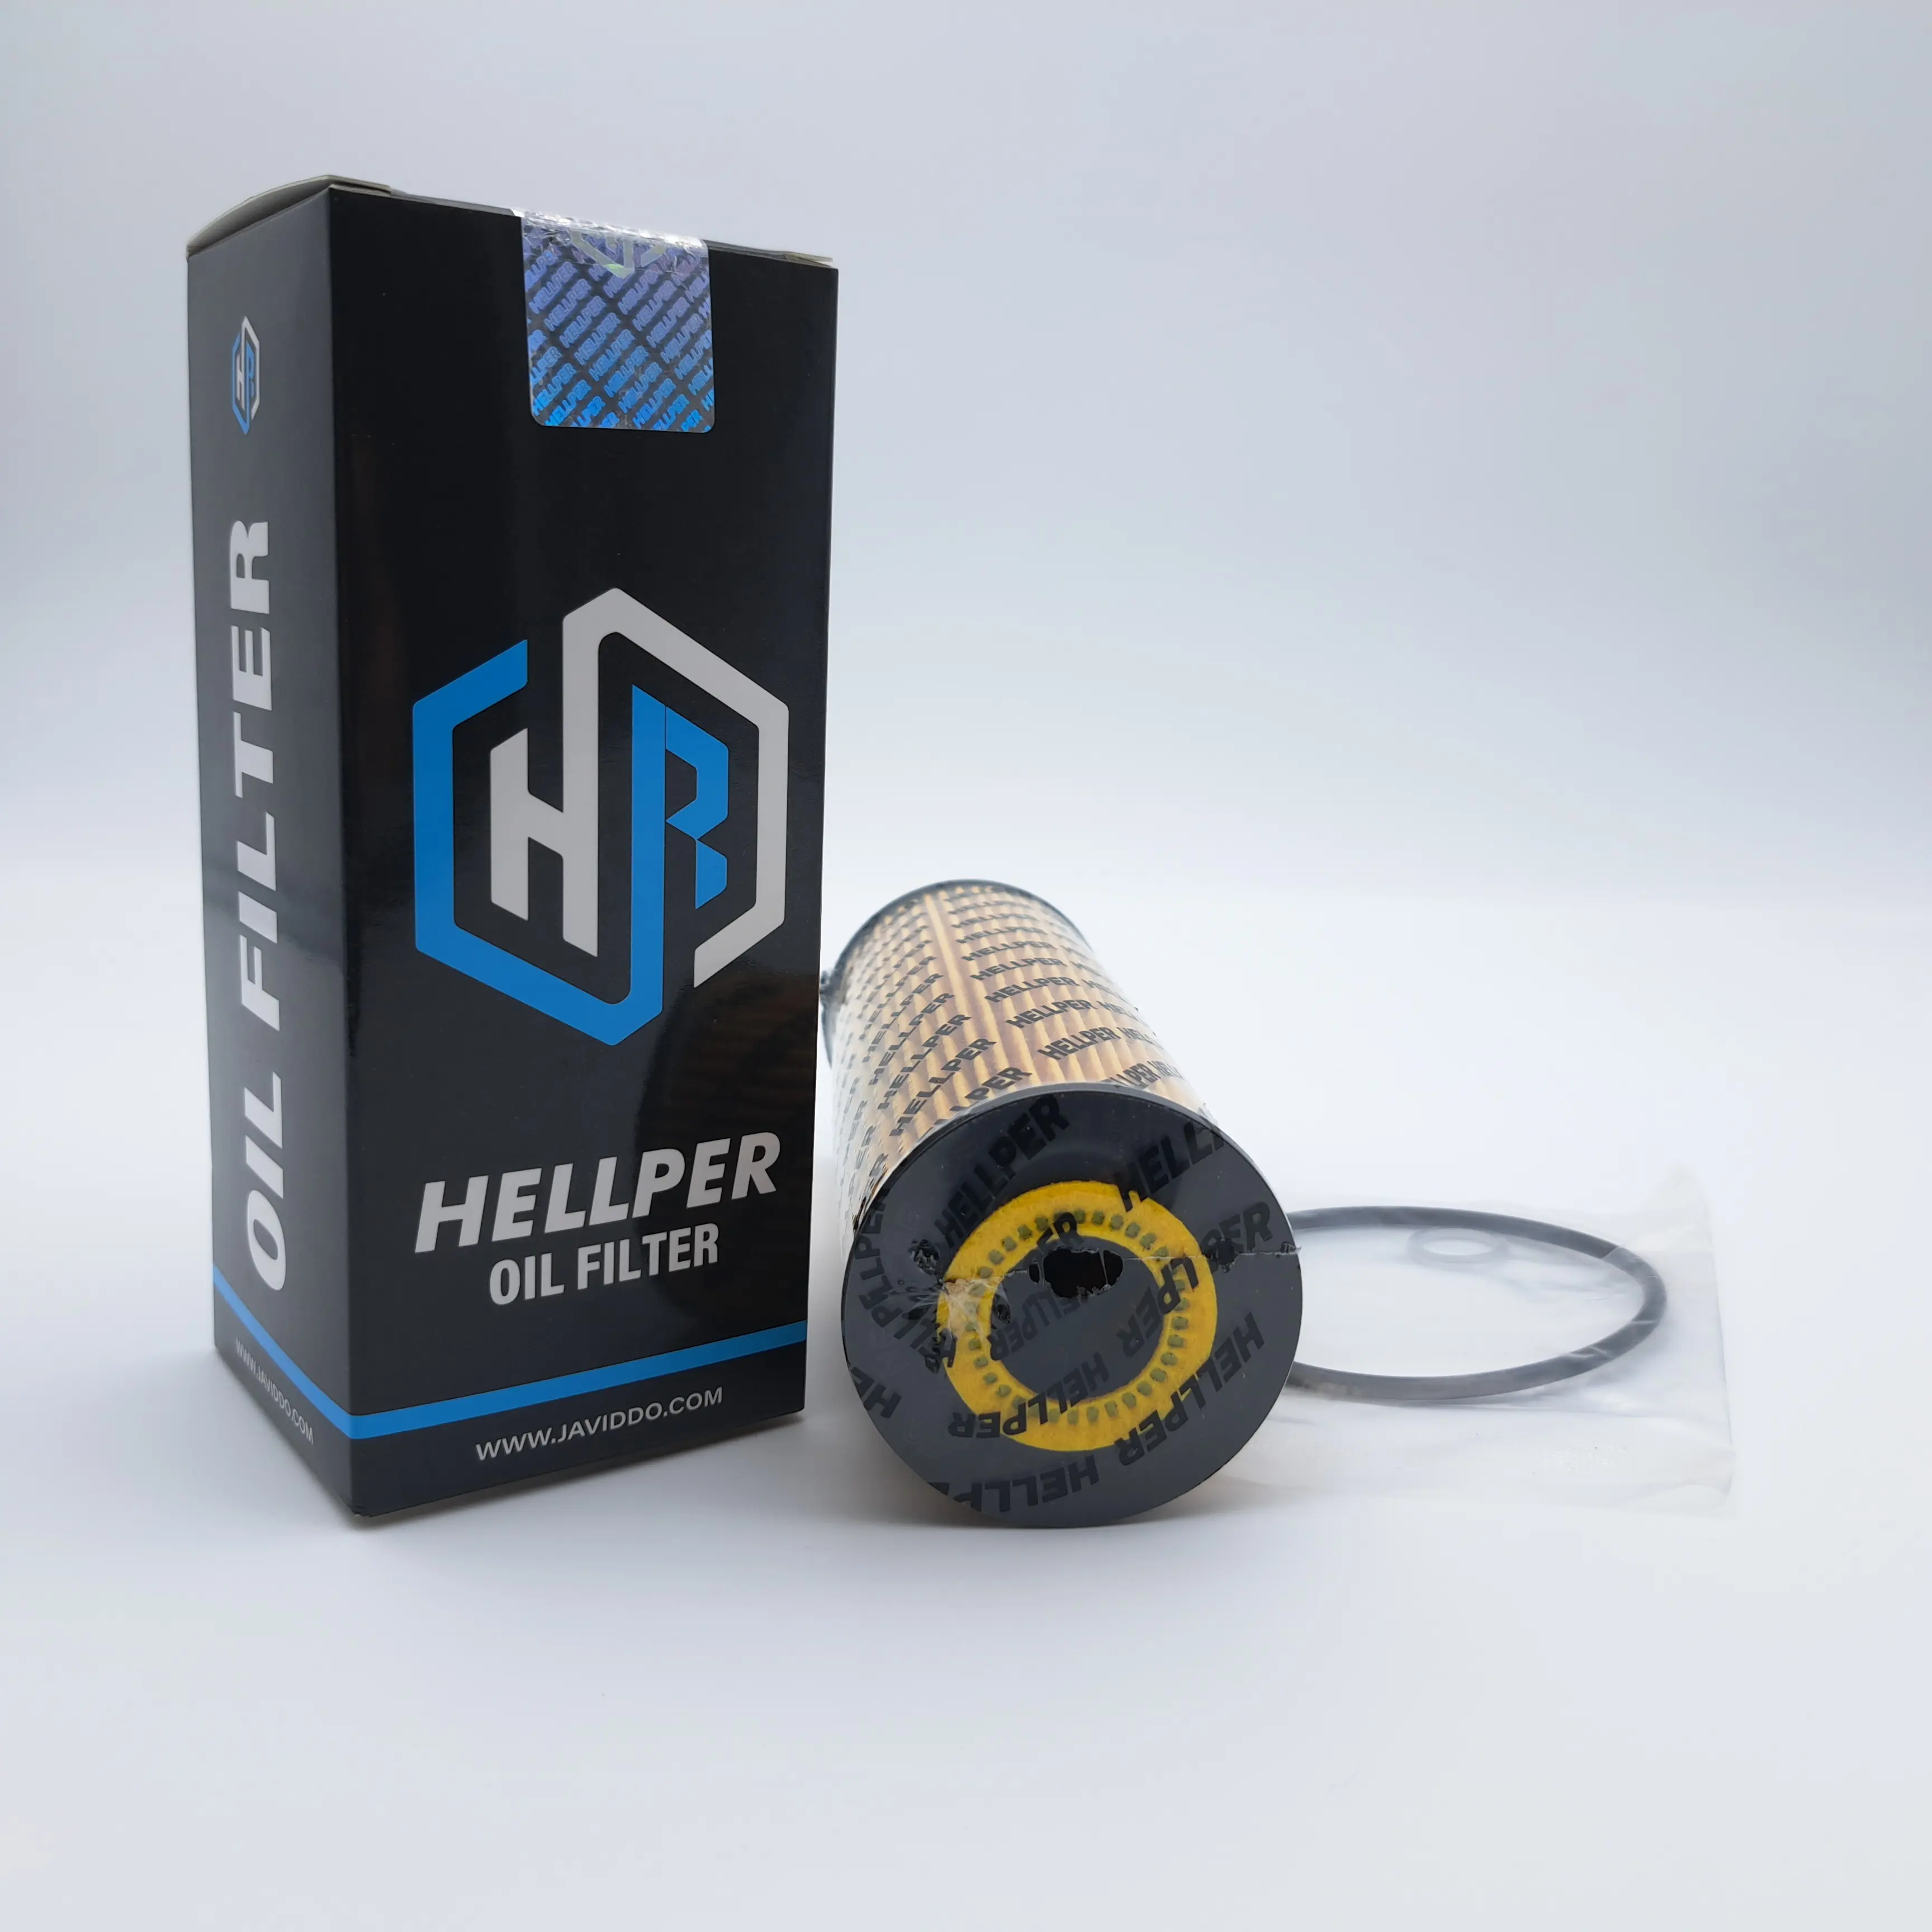 Hellper OEM Oil Filter 1041800109 for Mercedes-Benz 300, C-series, E-series, S-series